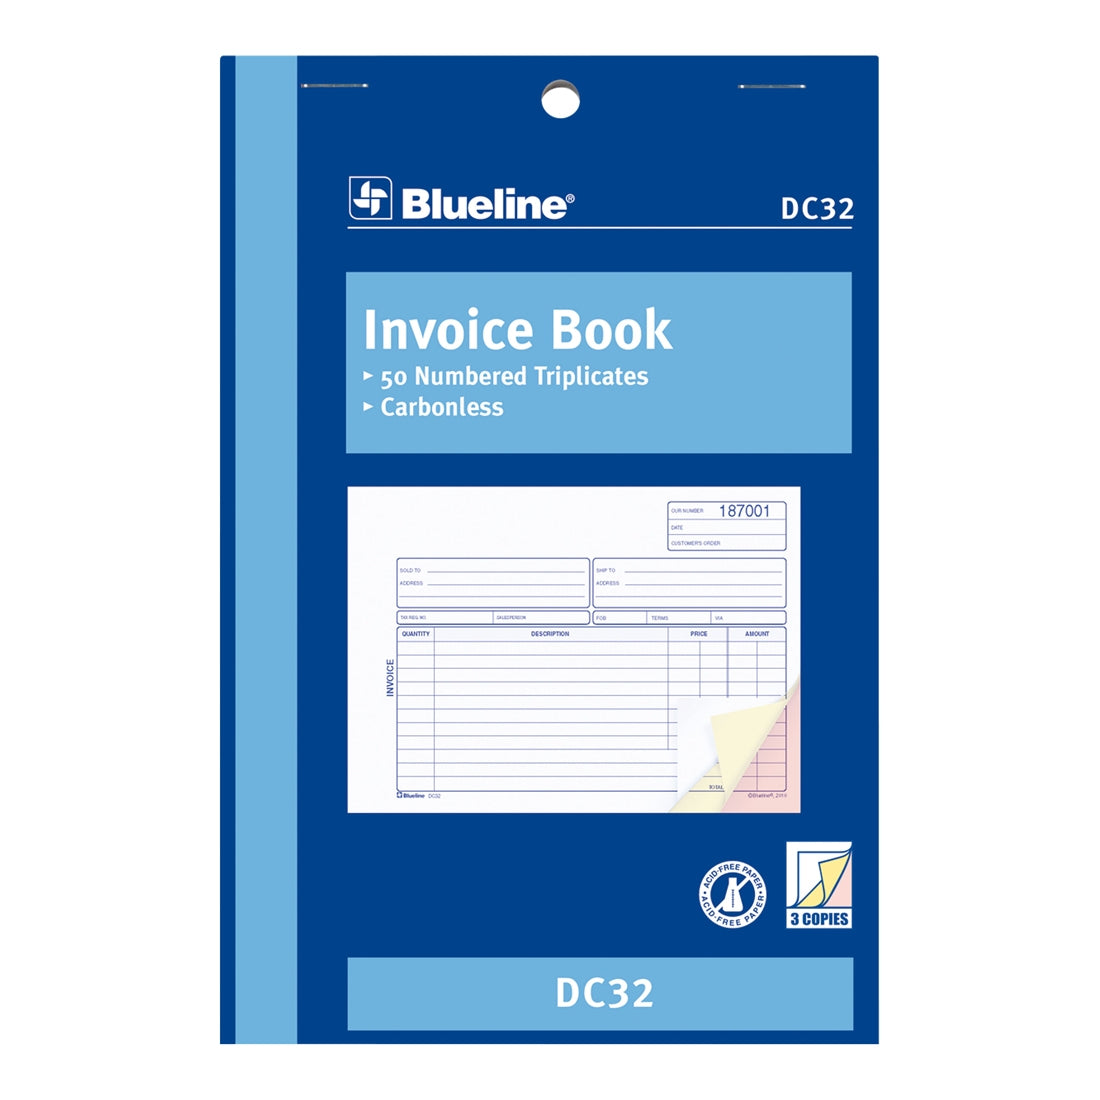 Invoices Book